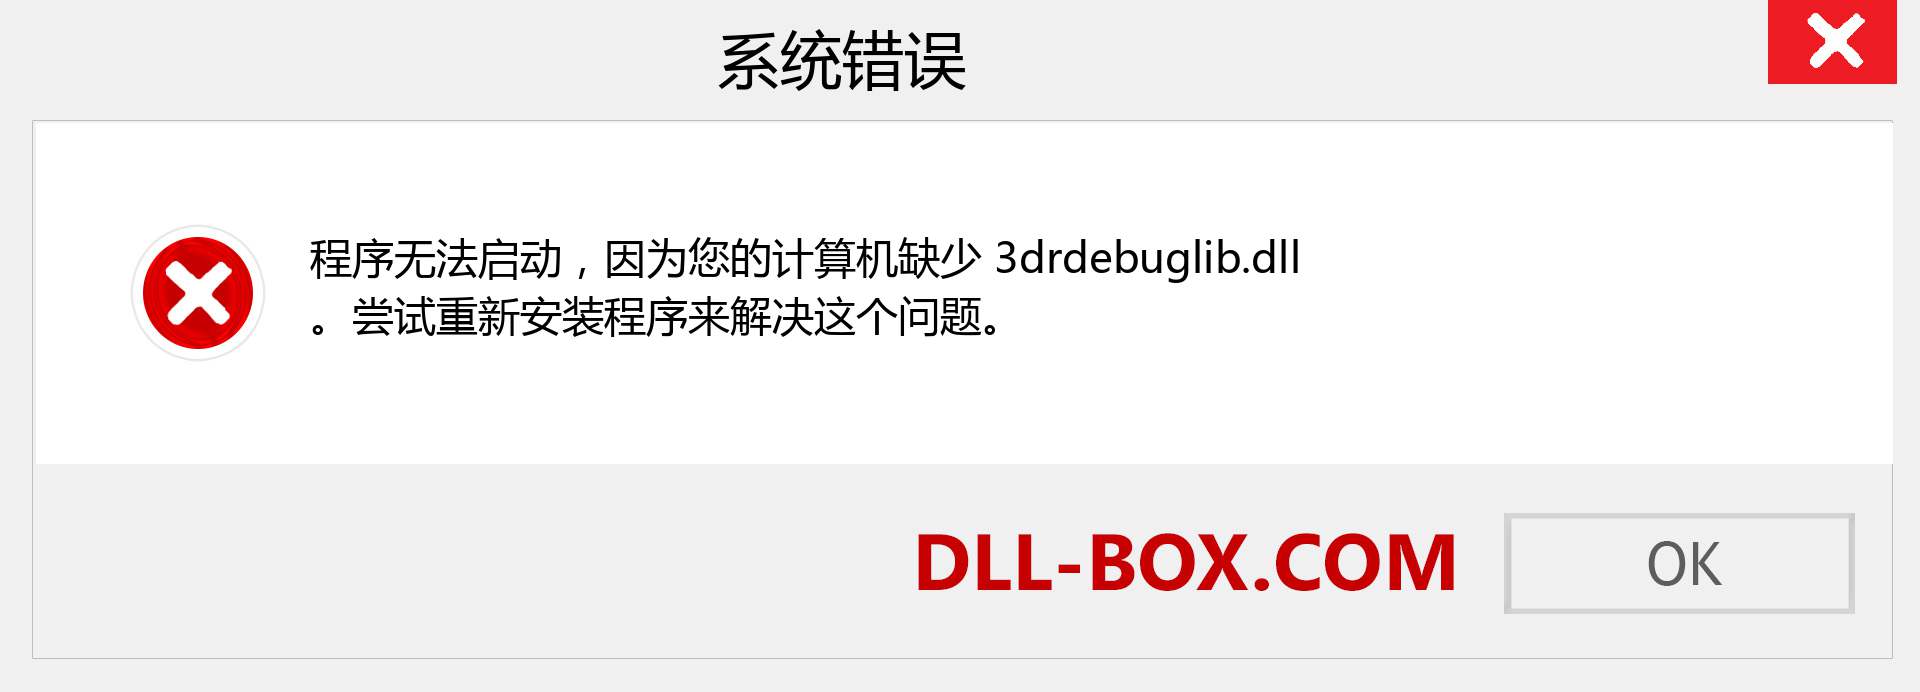 3drdebuglib.dll 文件丢失？。 适用于 Windows 7、8、10 的下载 - 修复 Windows、照片、图像上的 3drdebuglib dll 丢失错误